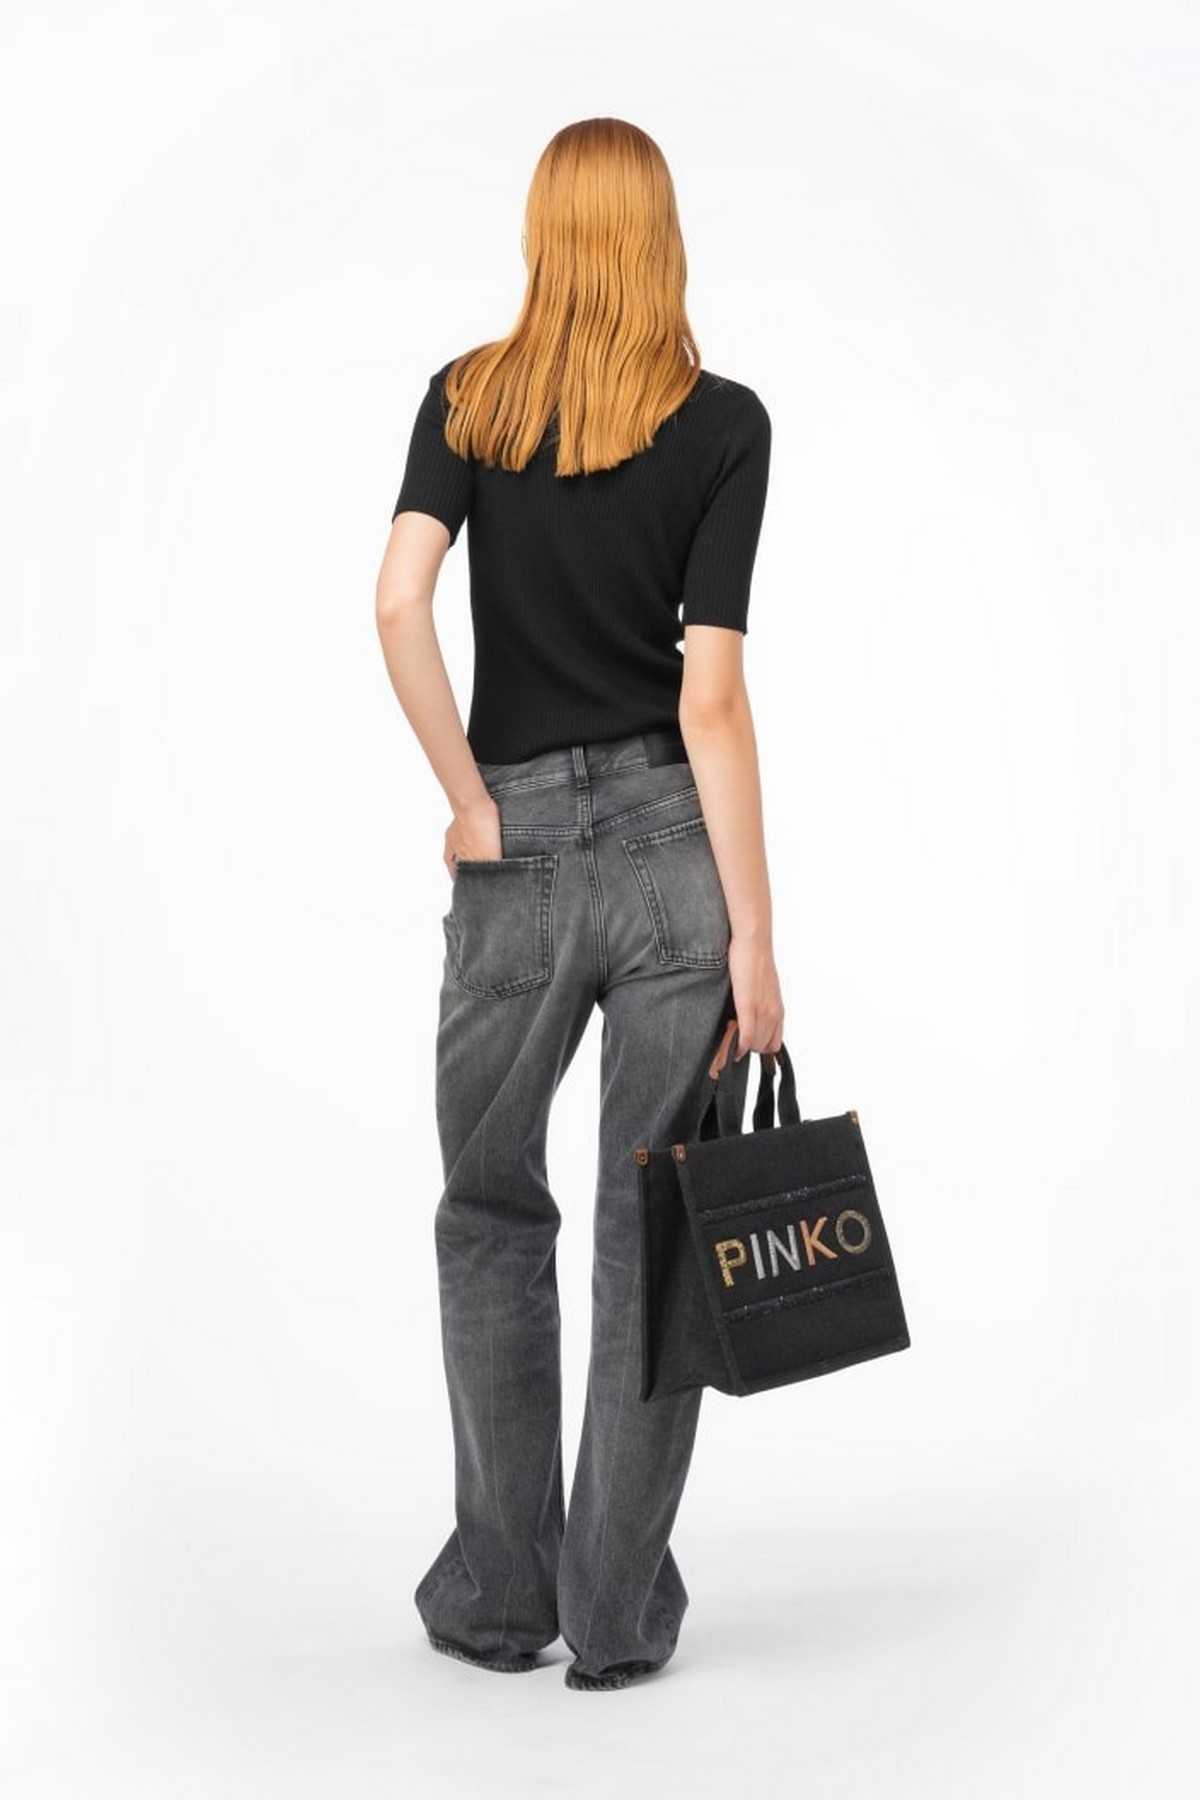 Pinko - Tritone Z99 - Trui rib Pinko logo zwart - uitverkocht